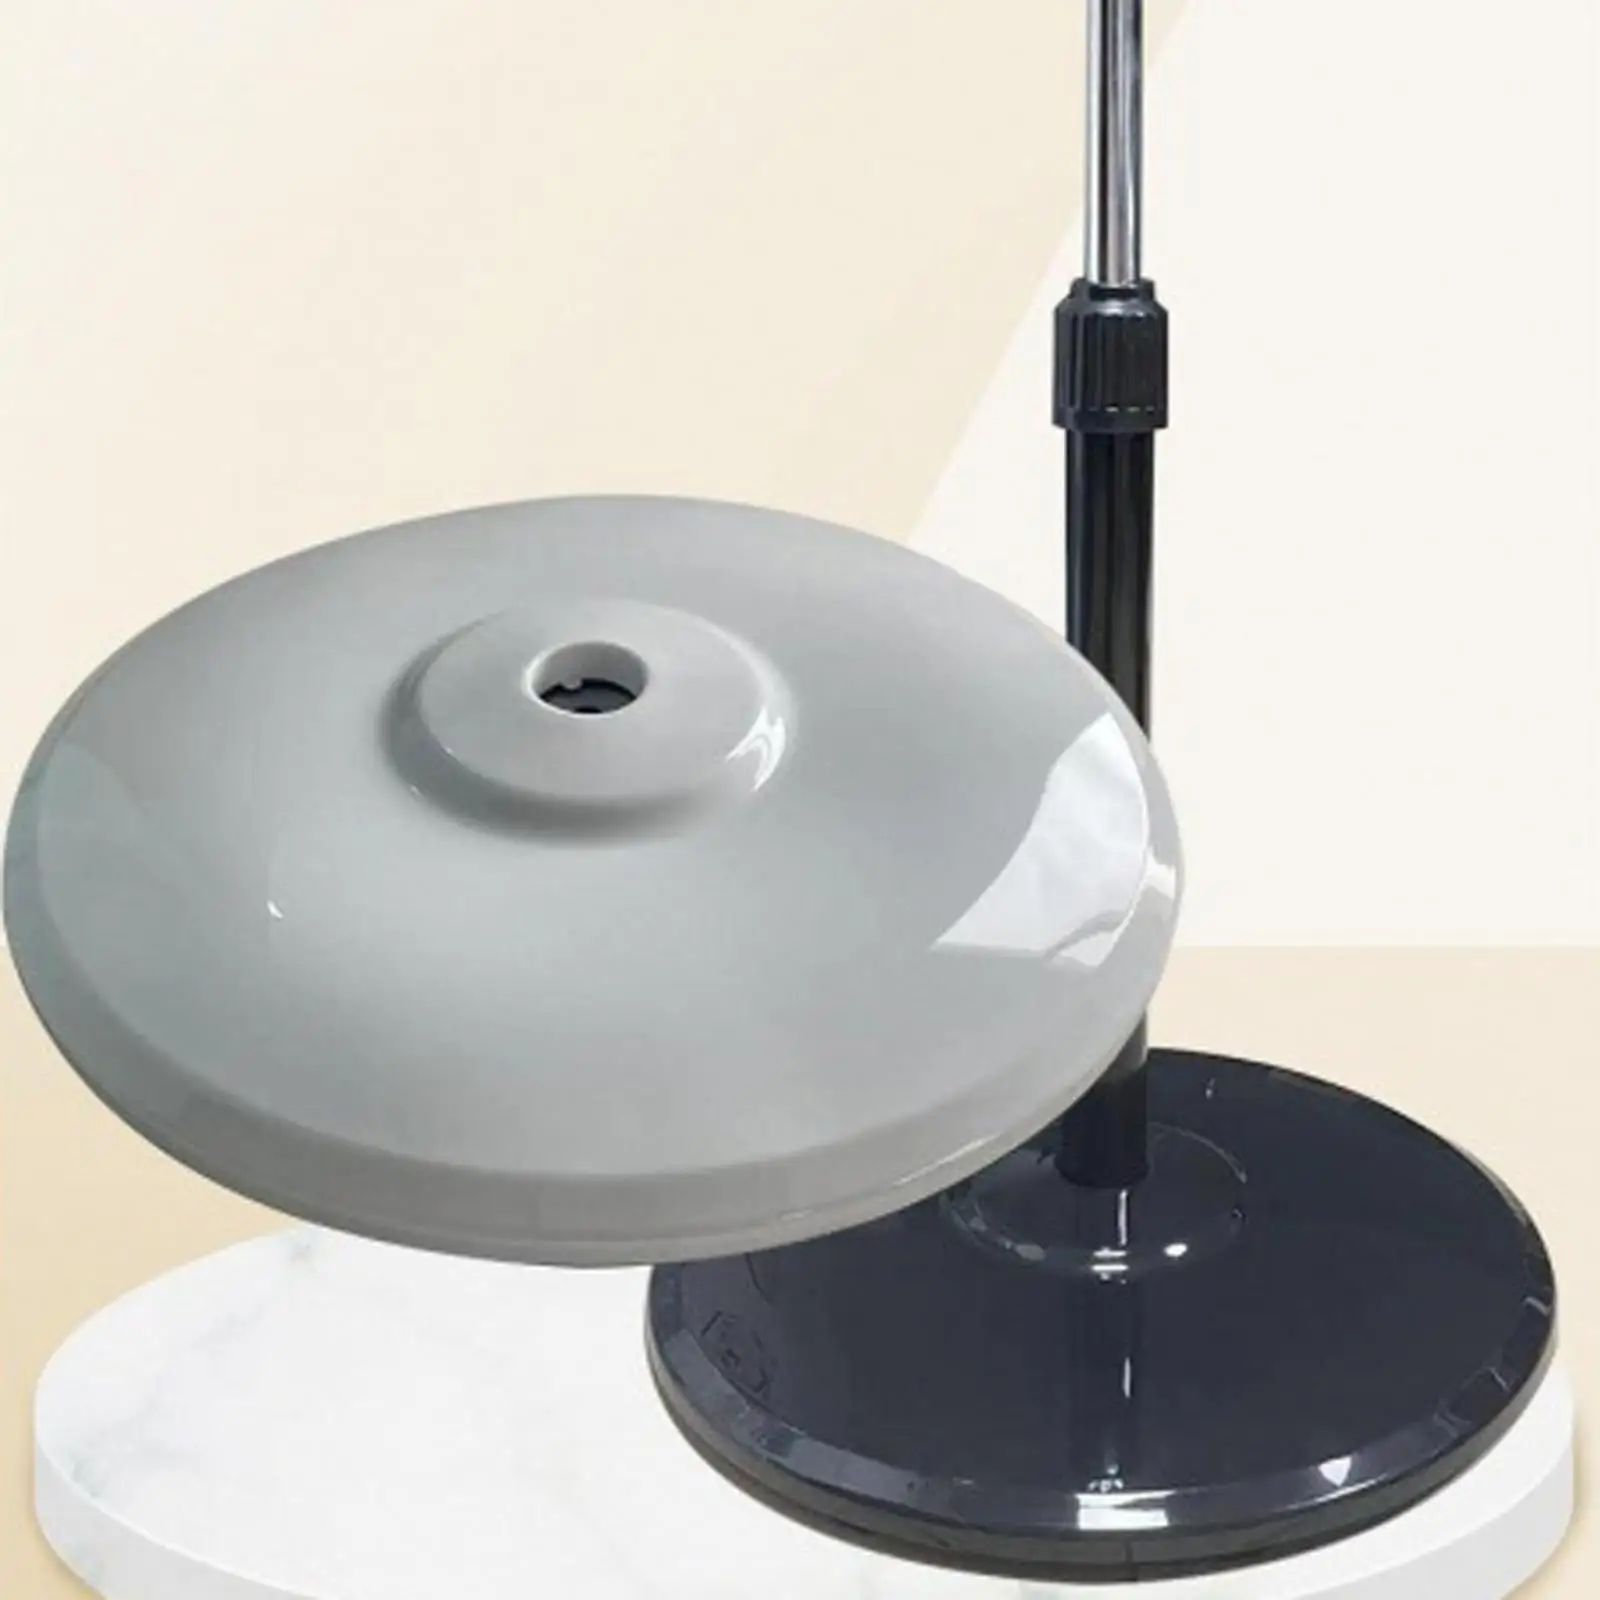 Pedestal Fan Base Repair Oscillating Fan Chassis for Desktop Office